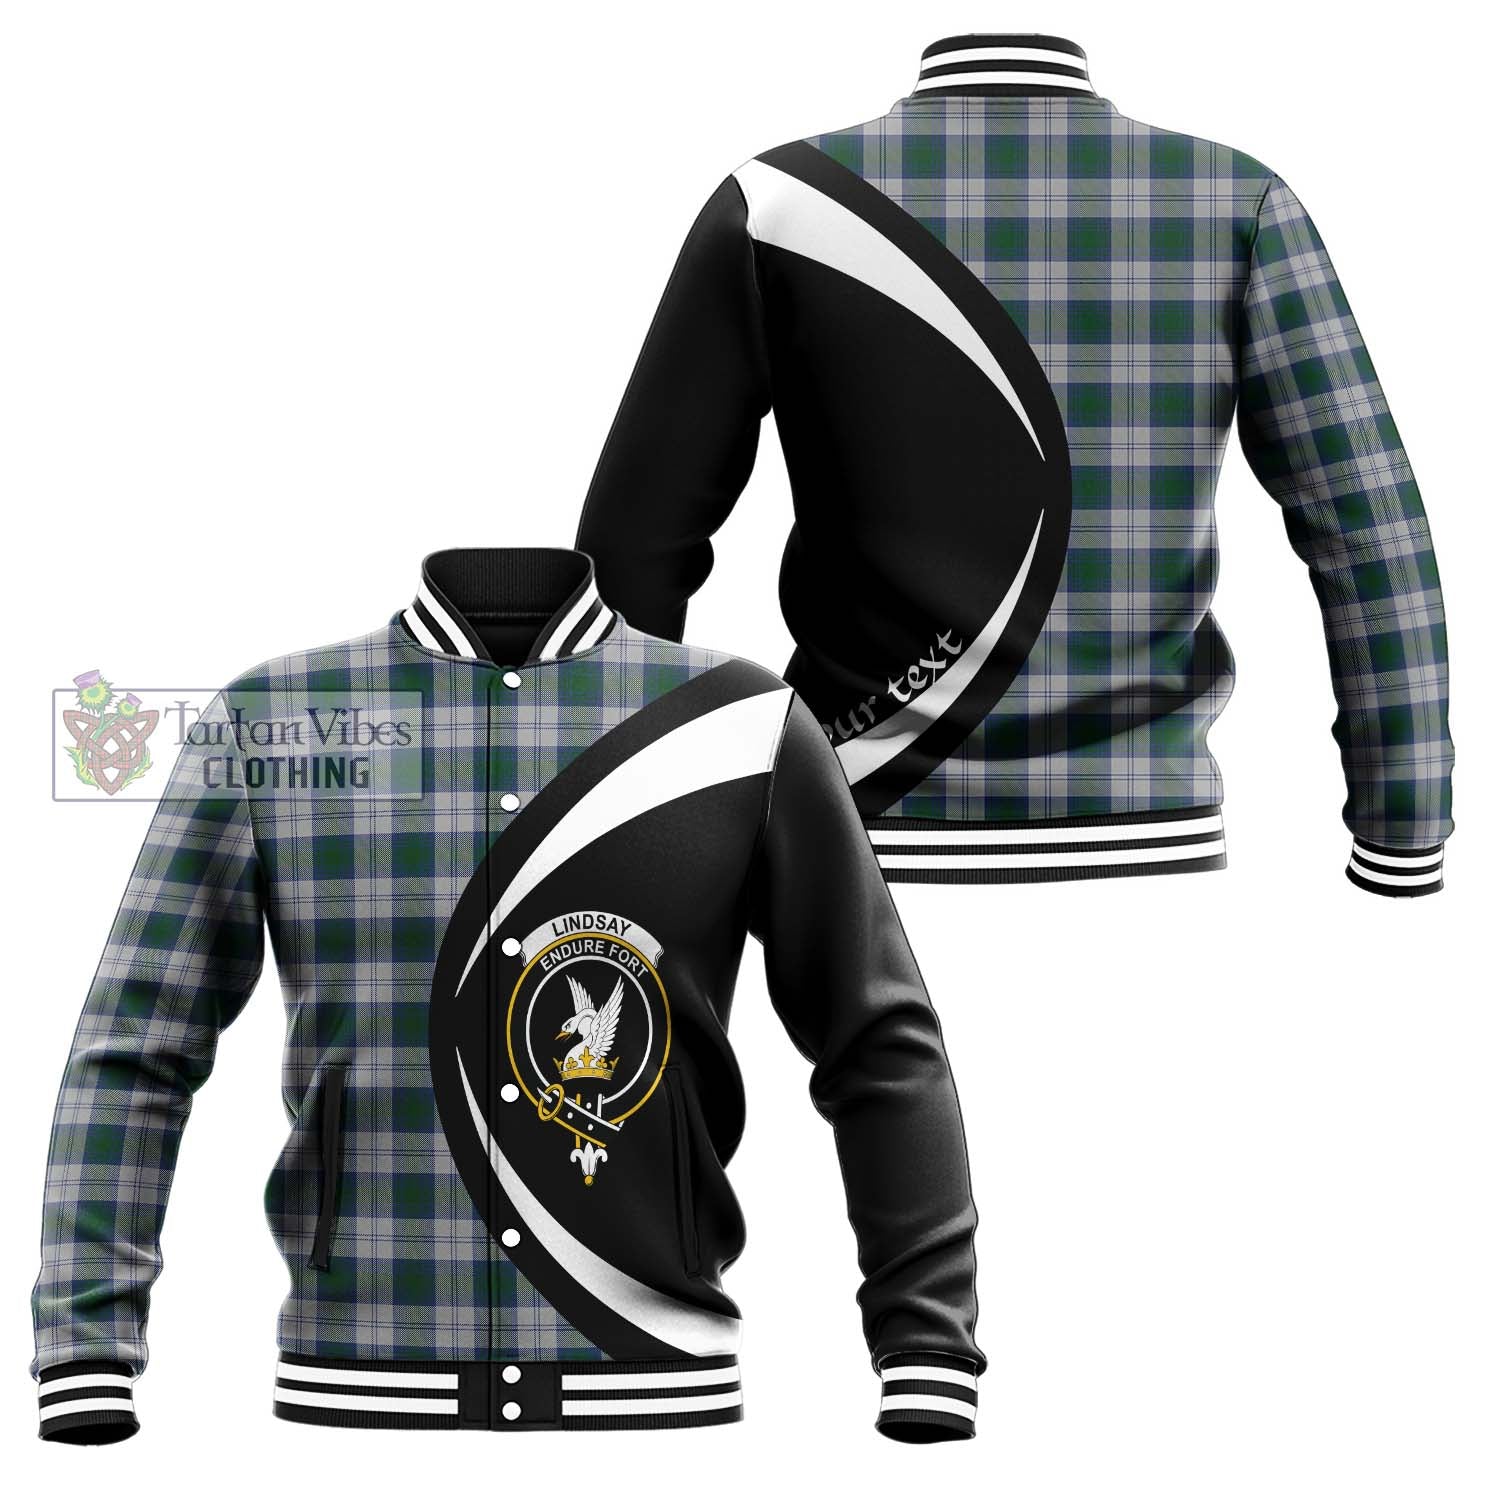 Tartan Vibes Clothing Lindsay Dress Tartan Baseball Jacket with Family Crest Circle Style